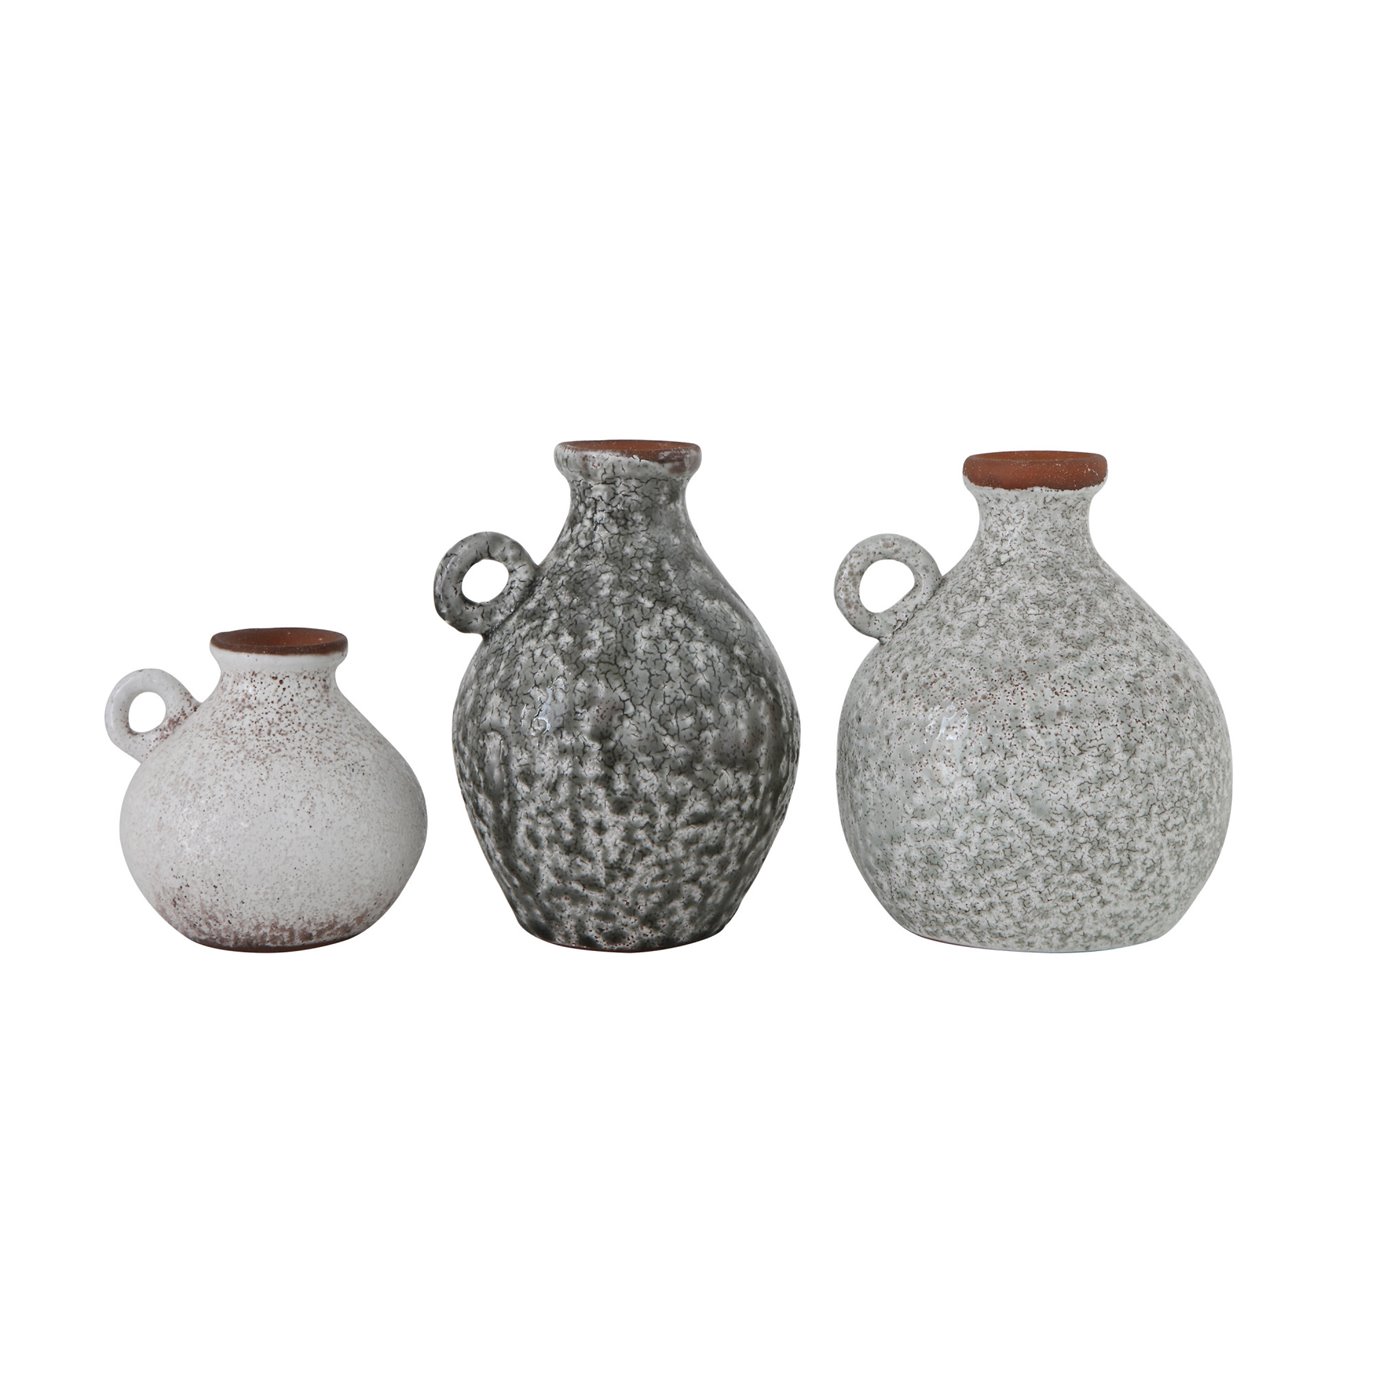 Distressed Grey Terracotta Vases with Reactive Glaze Finish (Set of 3 Sizes)